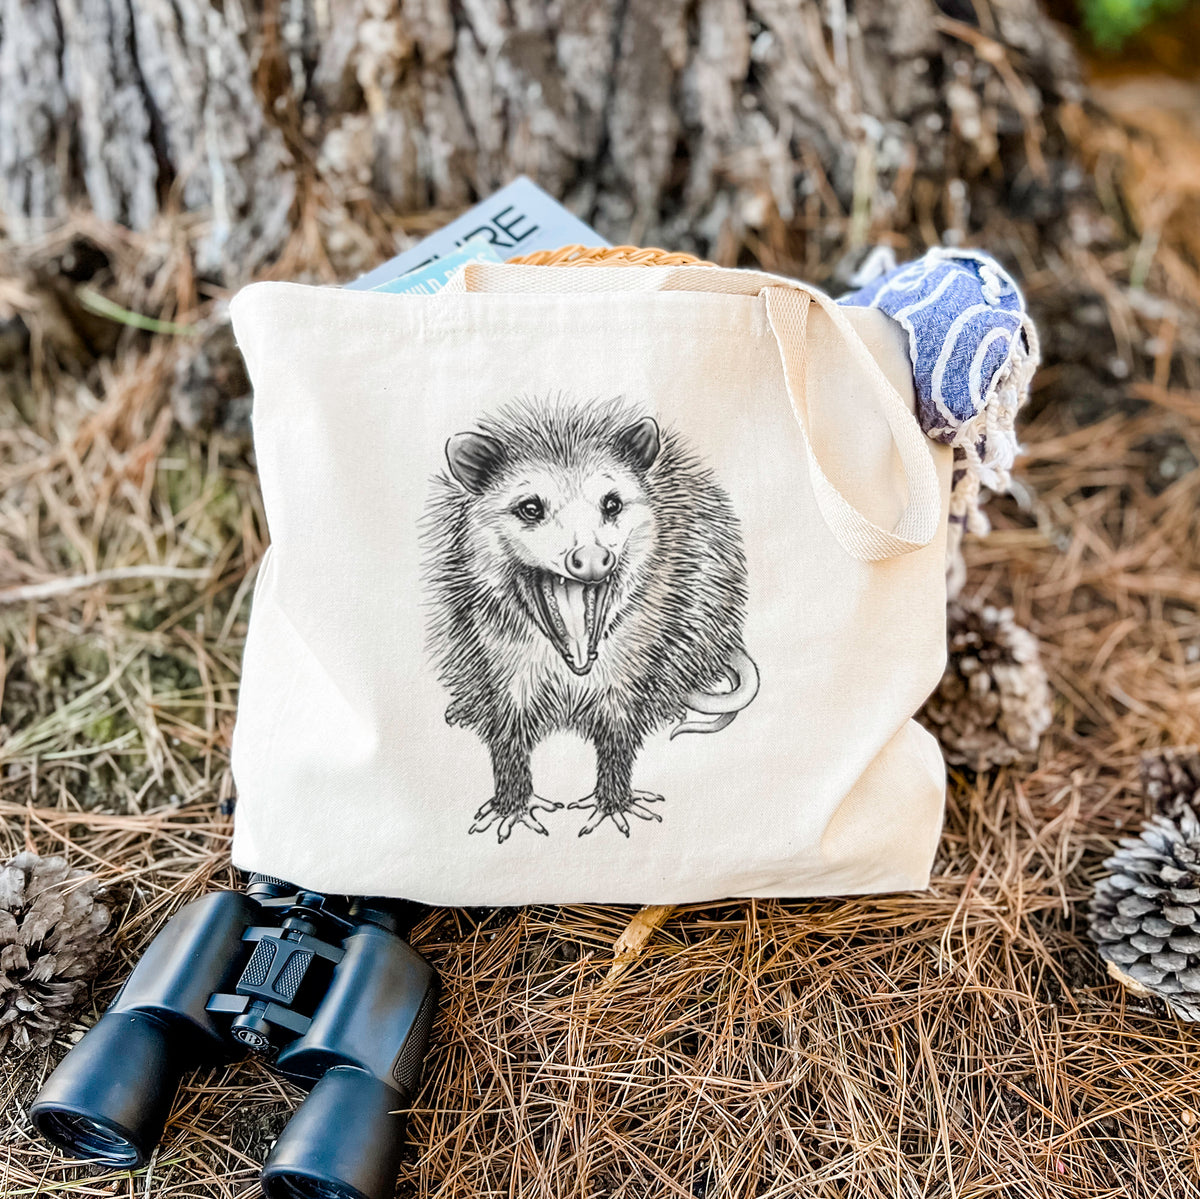 Hissing Opossum - Didelphidae - Tote Bag